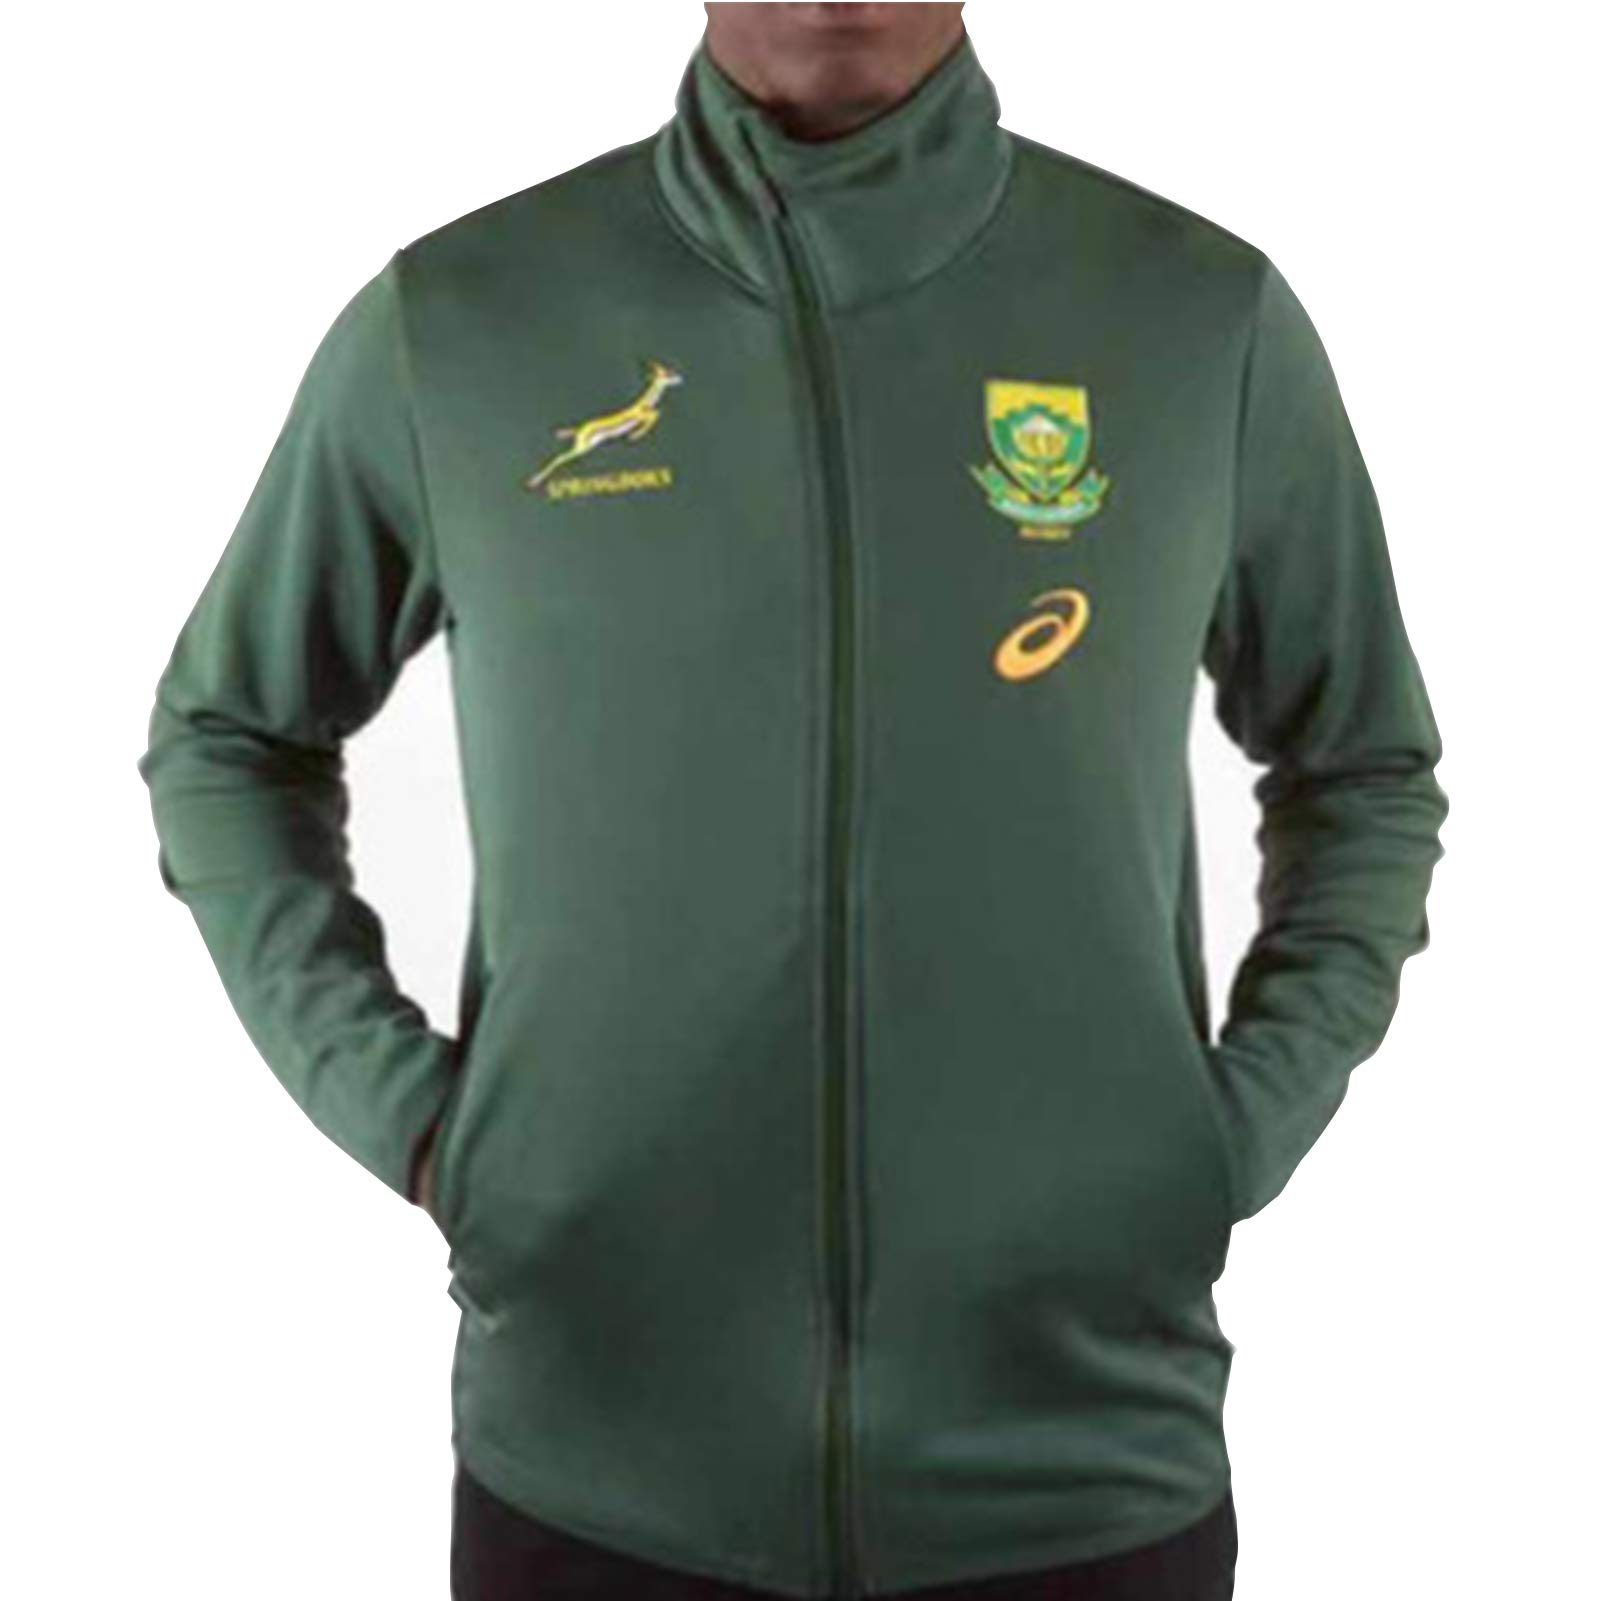 YINTE 2018 Südafrika Springboks Rugby Jersey, Weltcup-Jacke Football Training Anzug Trainingsanzüge, Herbst Und Winter Langarm Sweater Anzug Green-XXXL